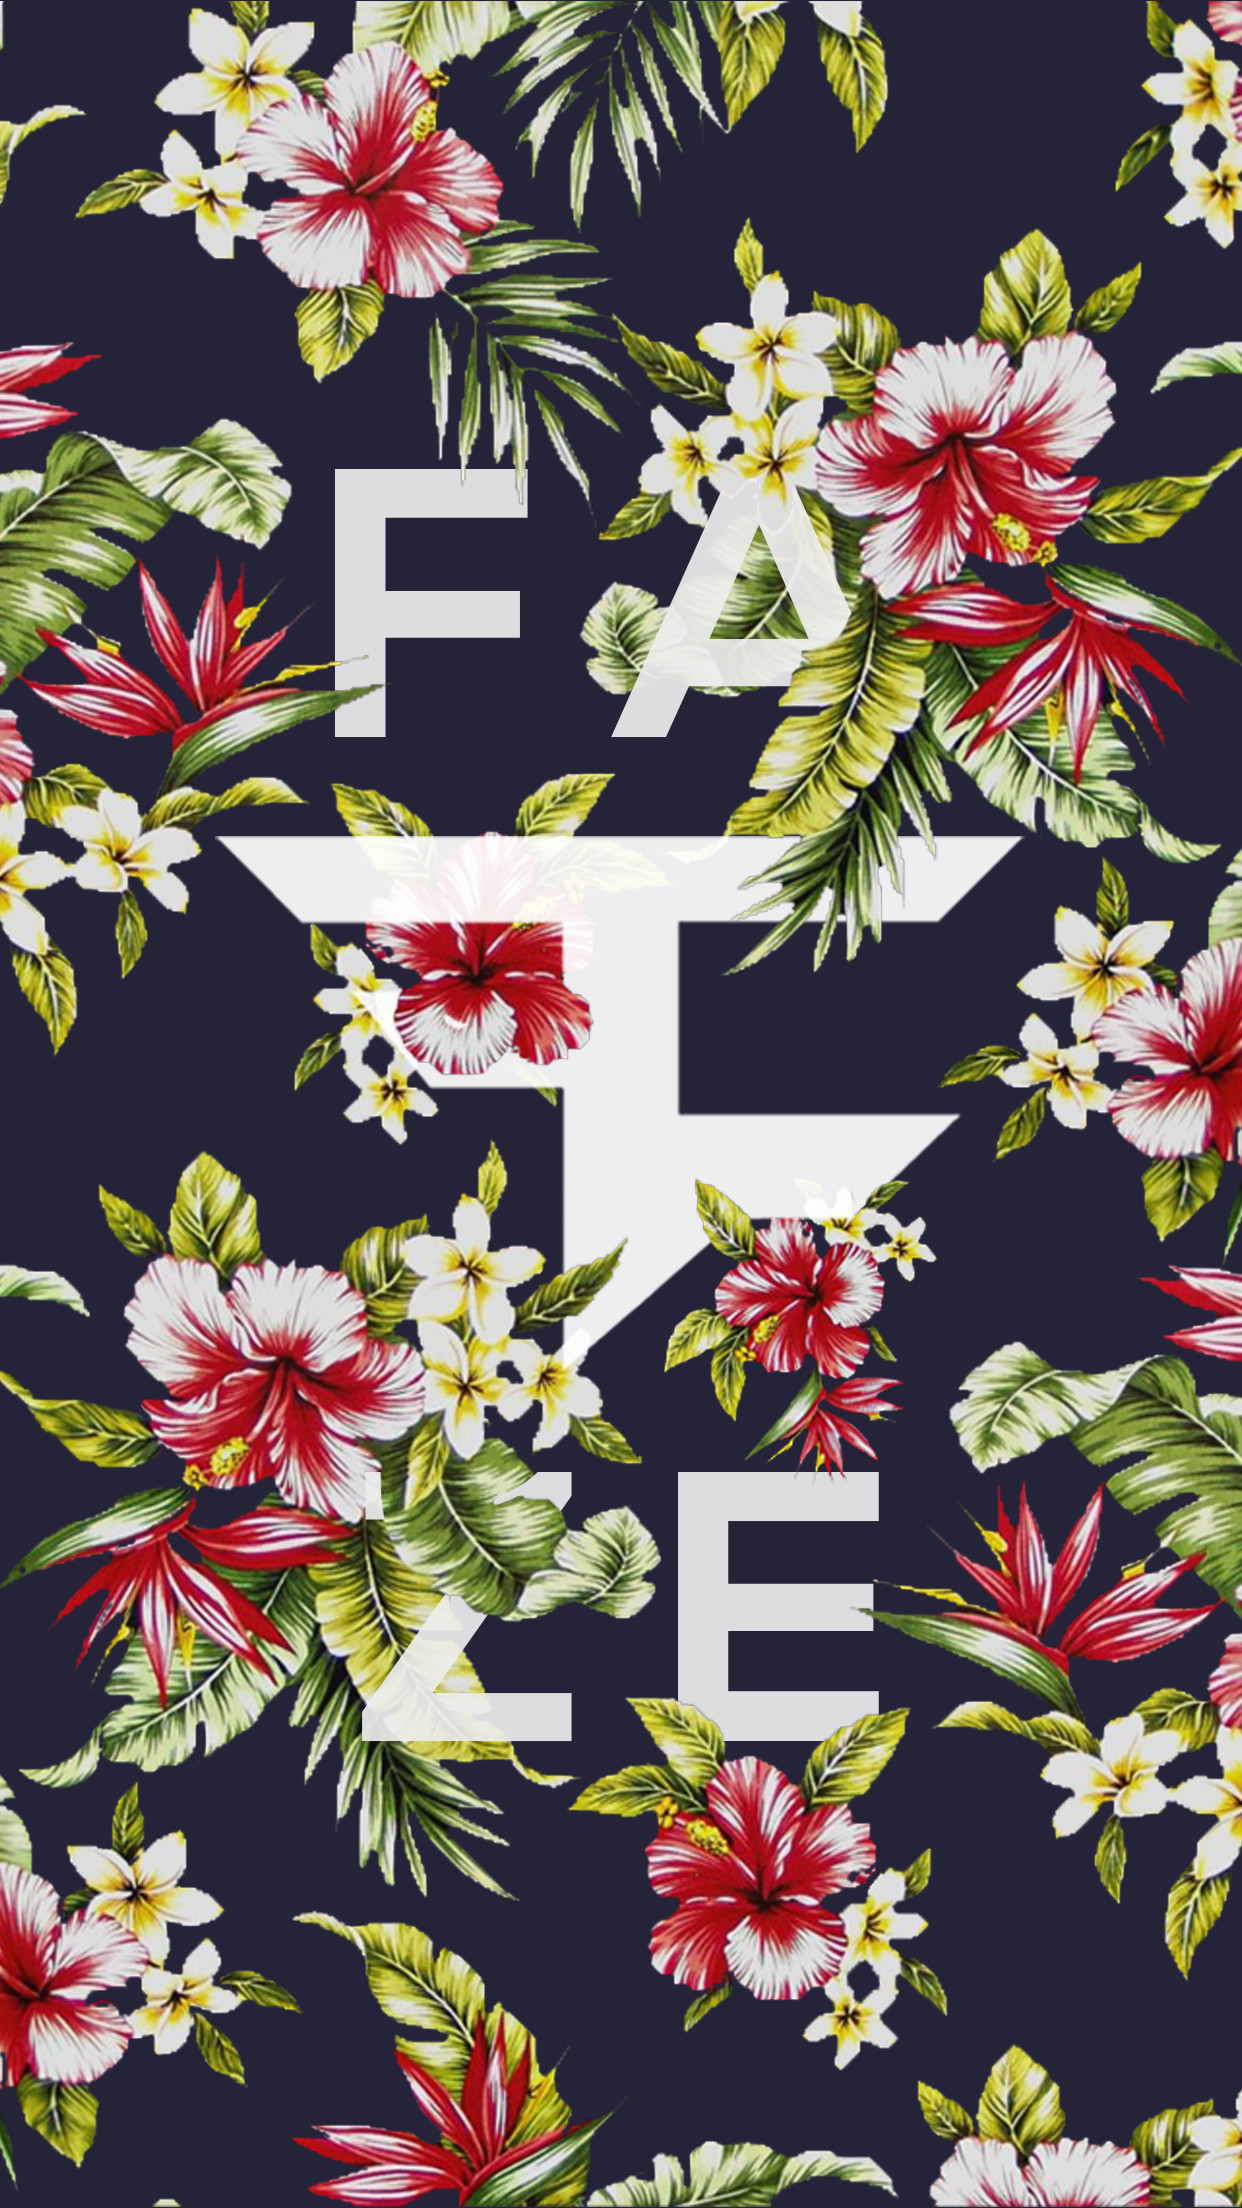 Faze Logo iPhone Wallpaper (92+ images)